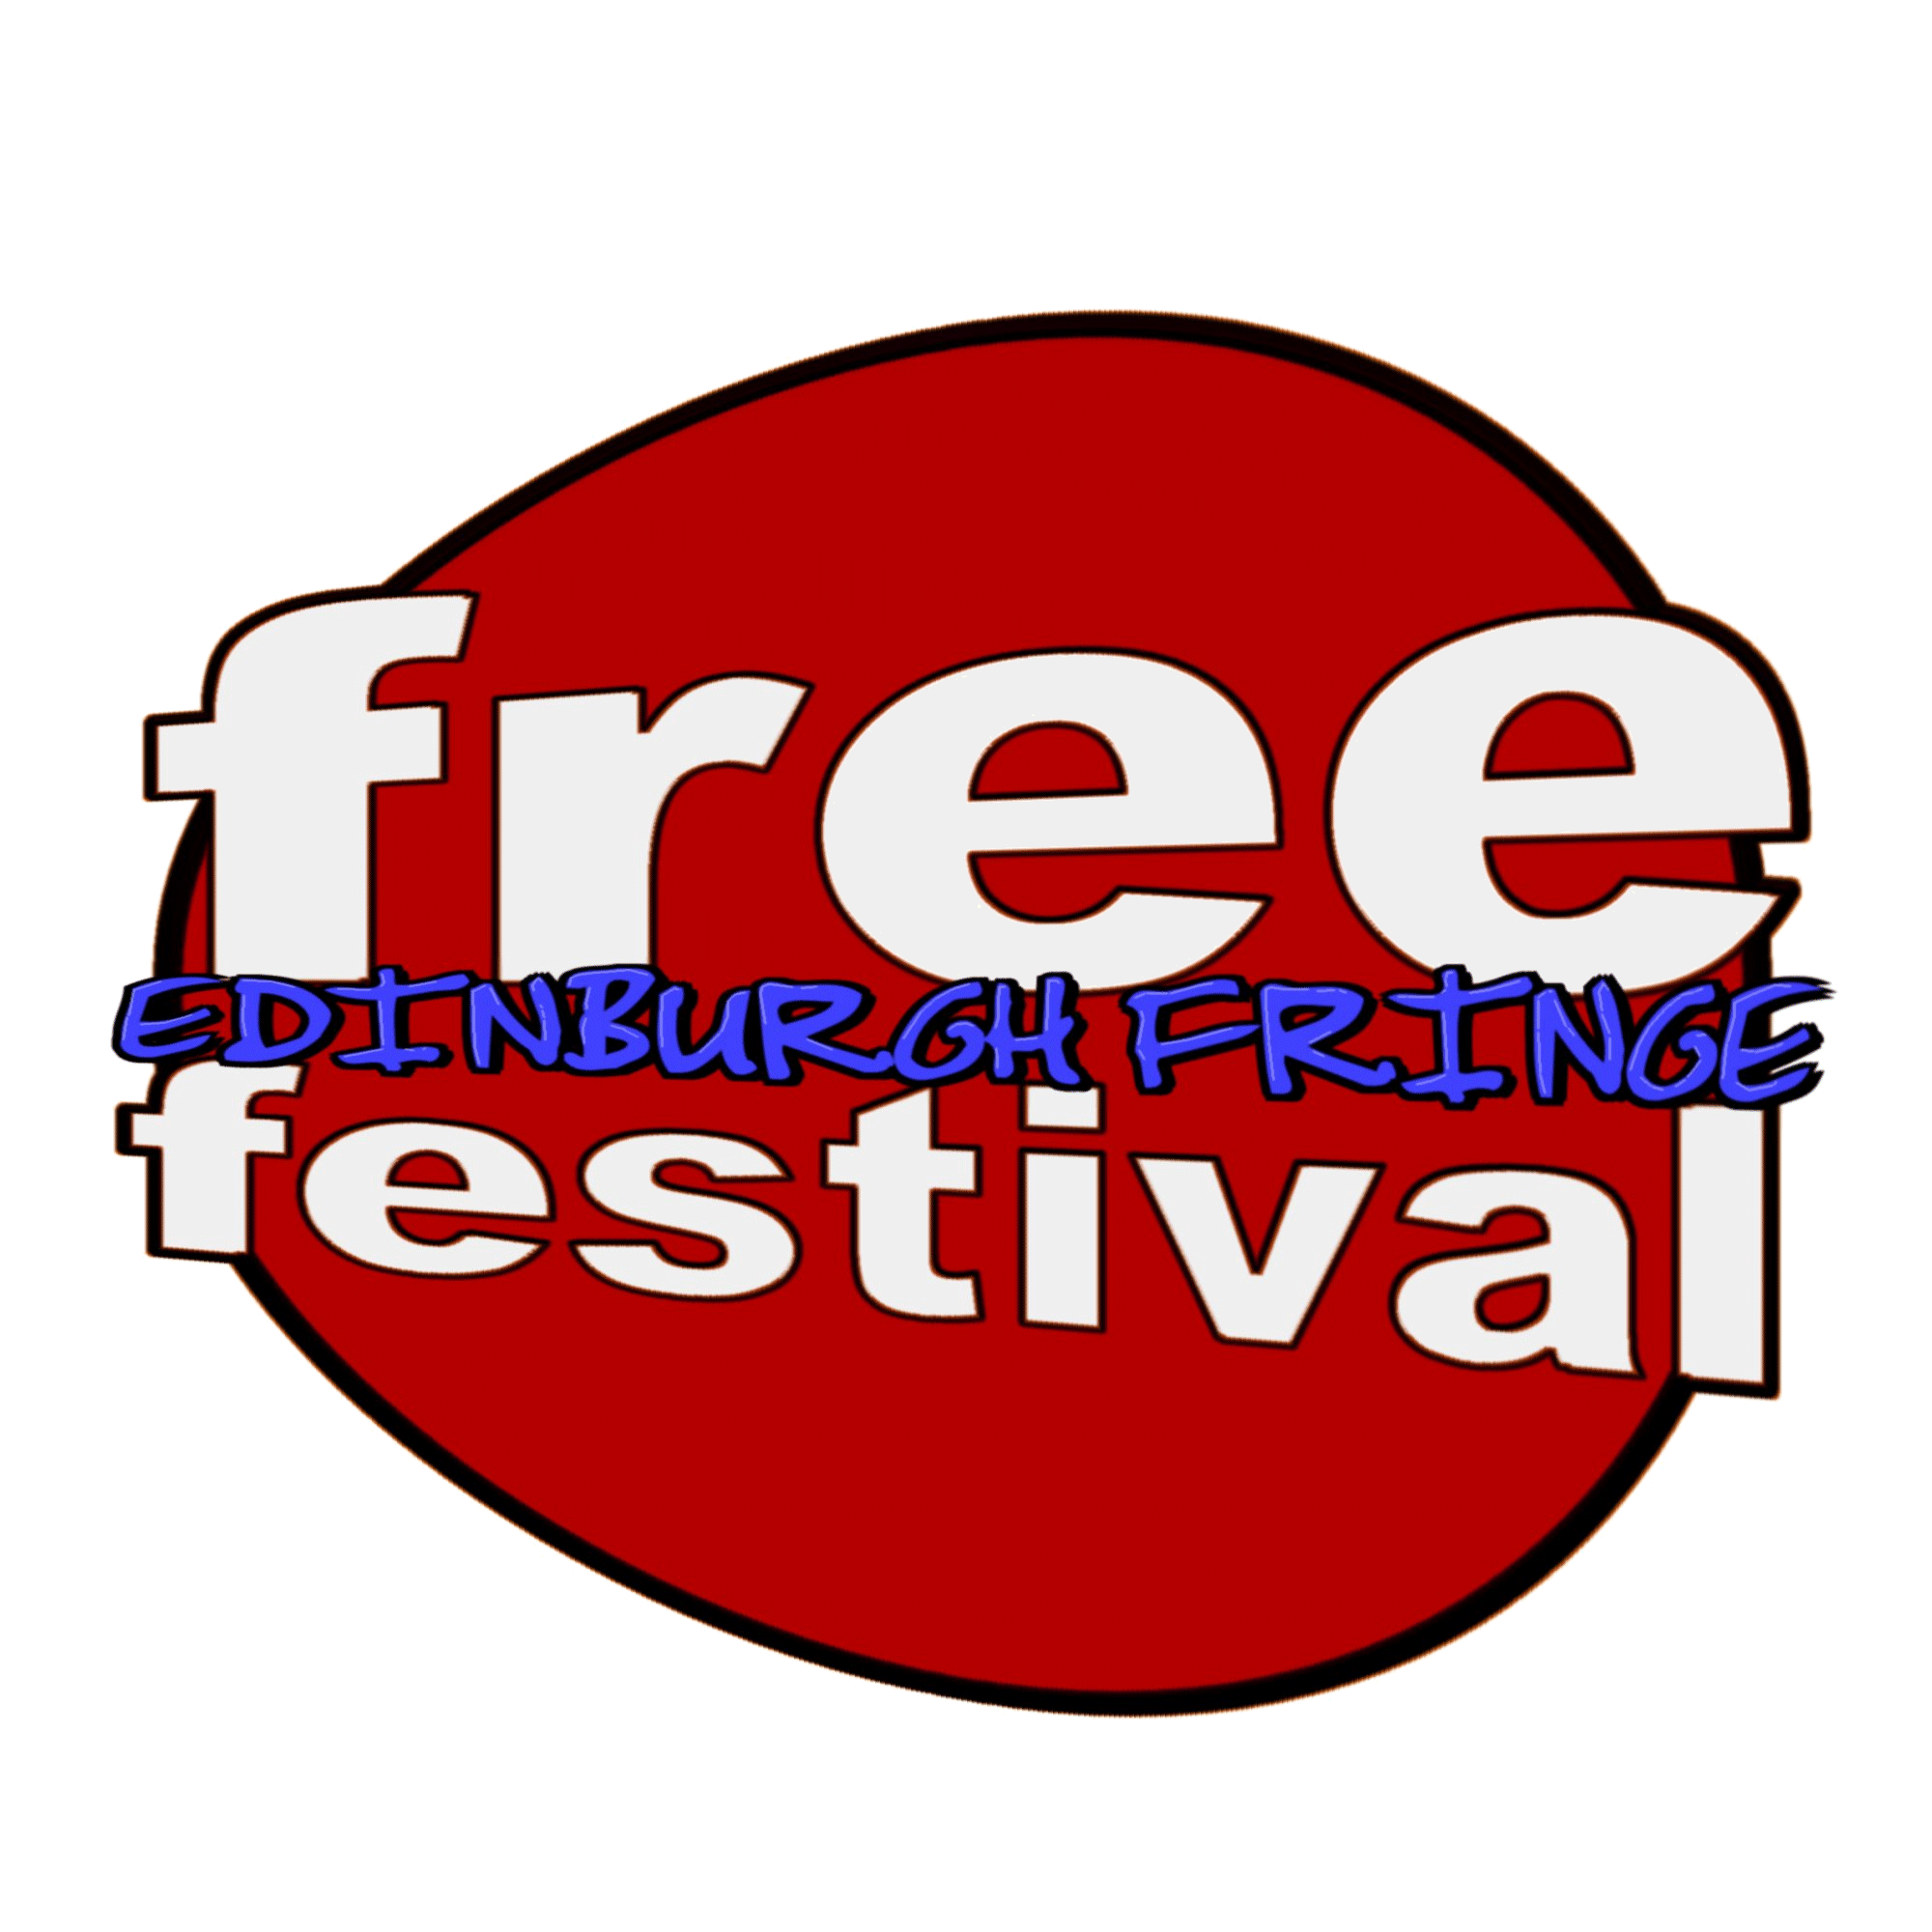 Fringed Red Circle Brand Logo - Free Edinburgh Fringe Festival - Performers Downloads